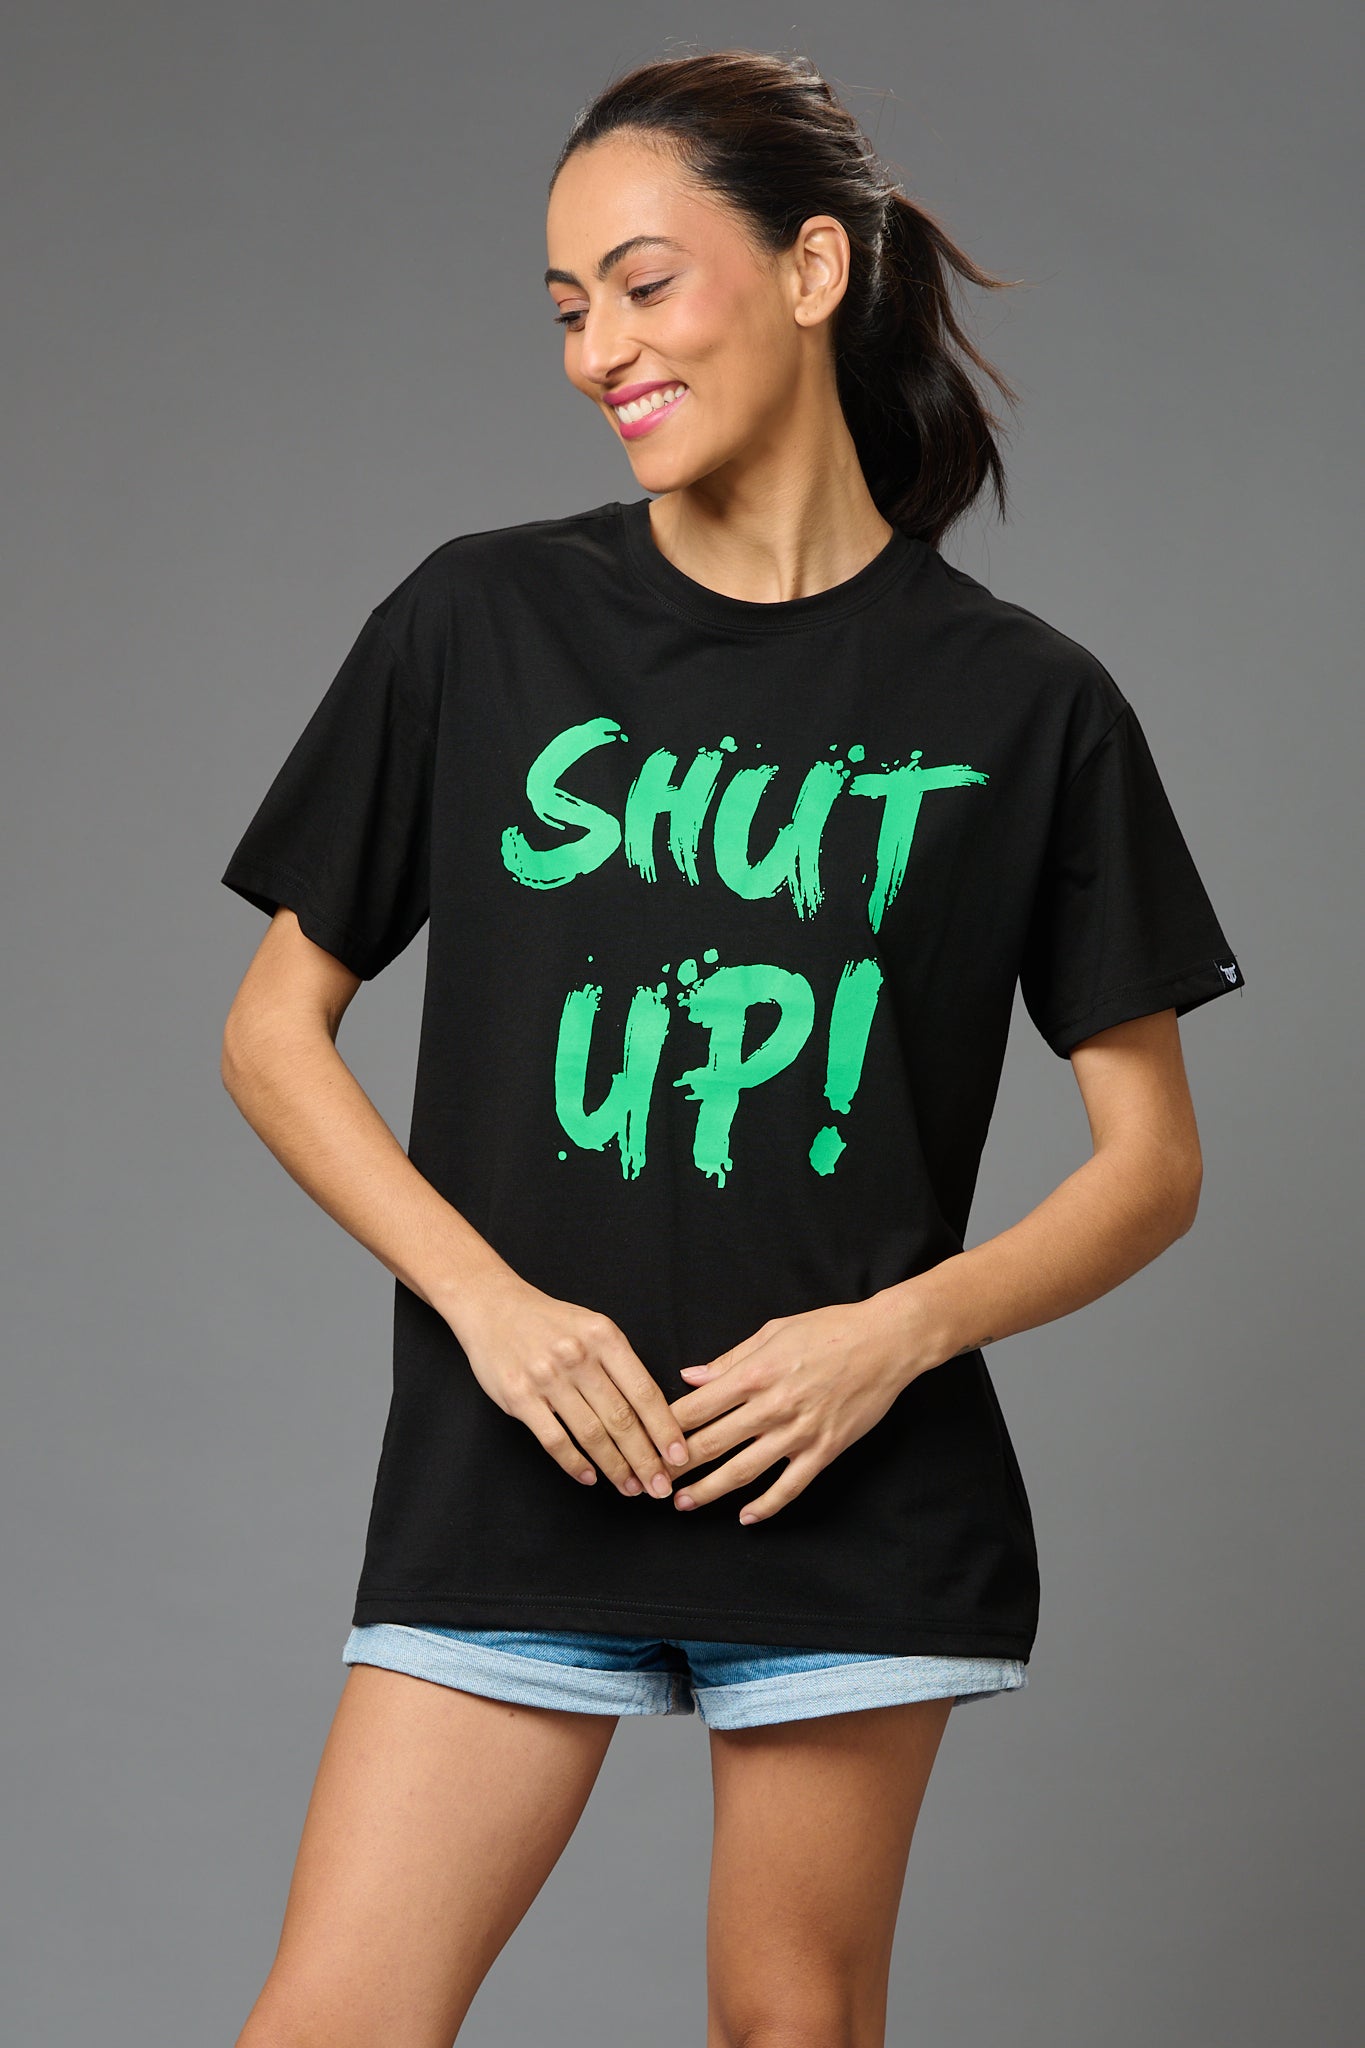 Shut Up! Printed Oversized T-Shirt for Women Oversized T-Shirt for Women